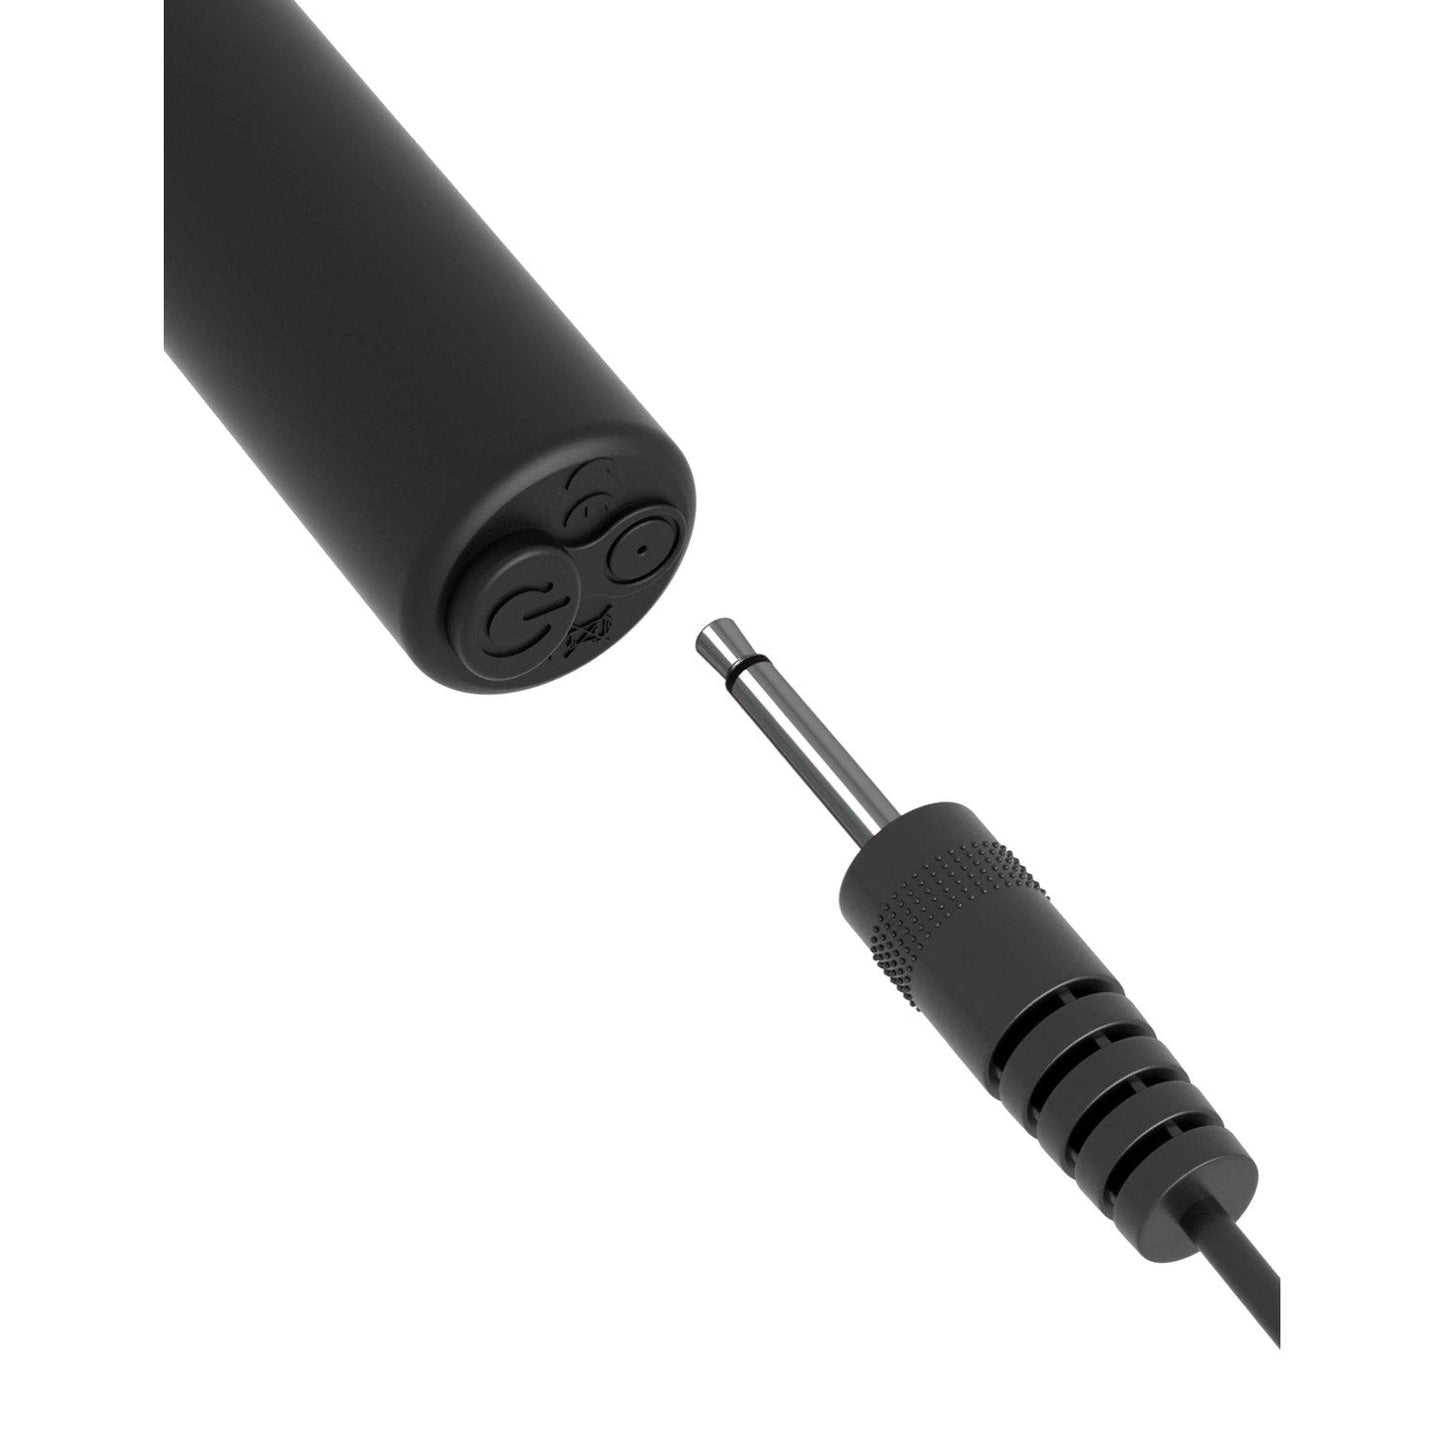 Remote Control Silicone Plug - Black 10 cm (4") Rechargeable Vibrating Butt Plug